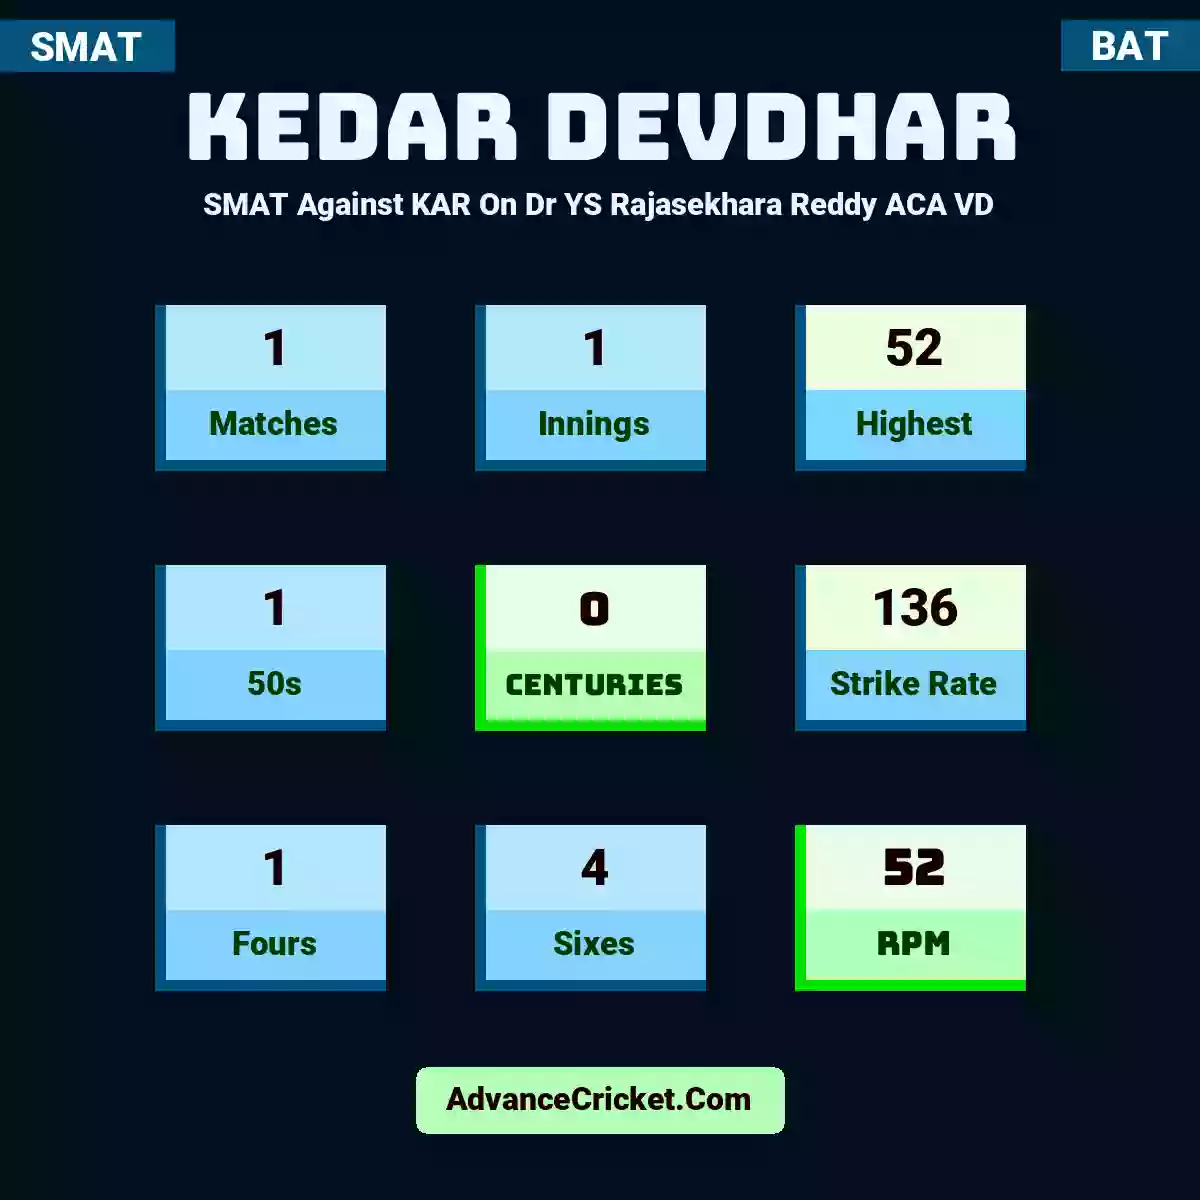 Kedar Devdhar SMAT  Against KAR On Dr YS Rajasekhara Reddy ACA VD, Kedar Devdhar played 1 matches, scored 52 runs as highest, 1 half-centuries, and 0 centuries, with a strike rate of 136. K.Devdhar hit 1 fours and 4 sixes, with an RPM of 52.